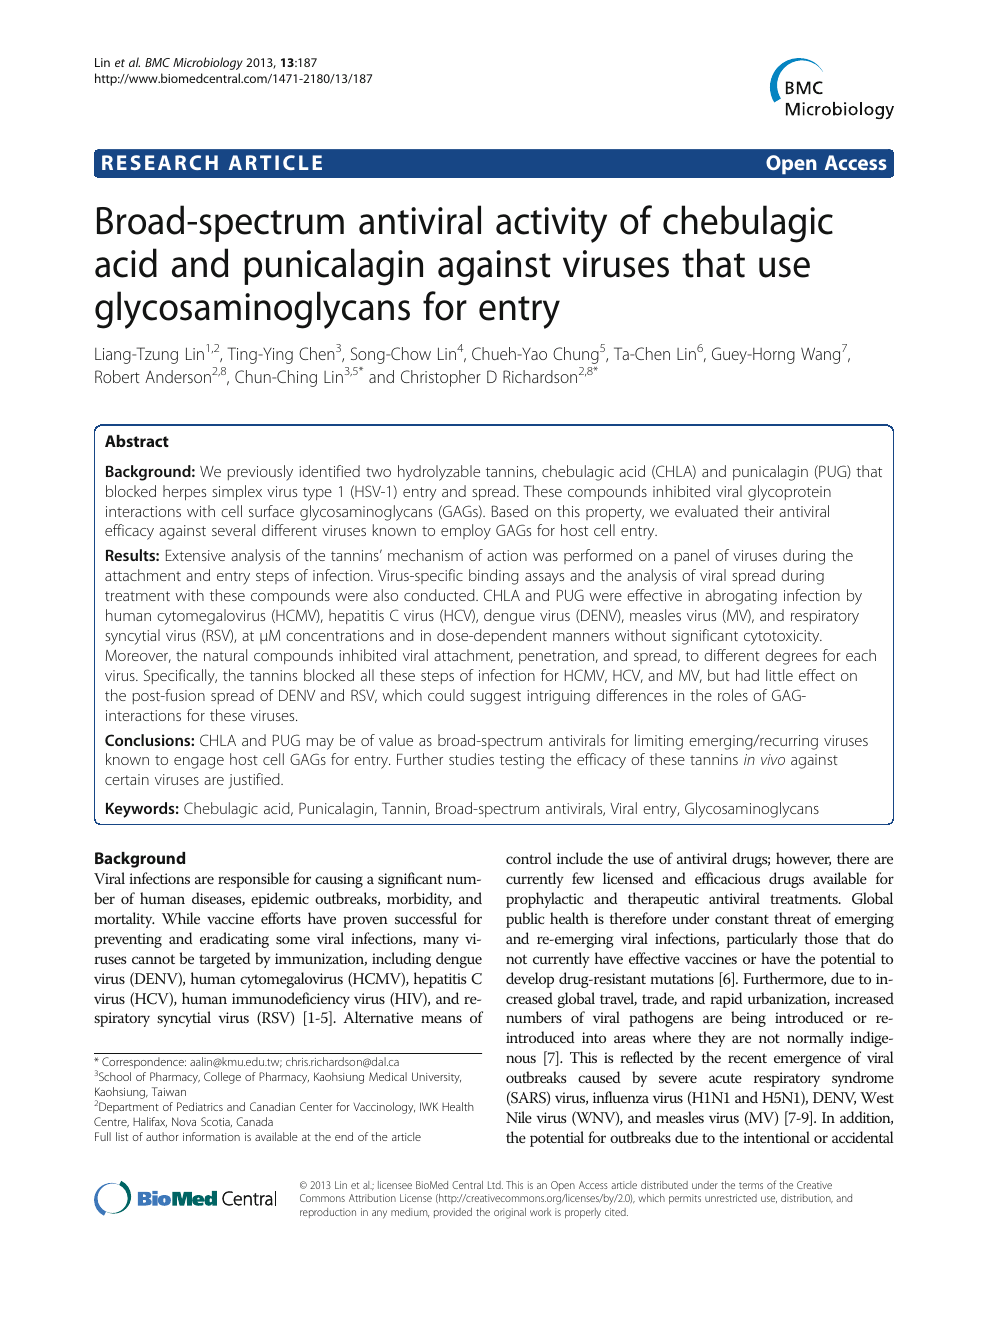 Broad Spectrum Antiviral Activity Of Chebulagic Acid And